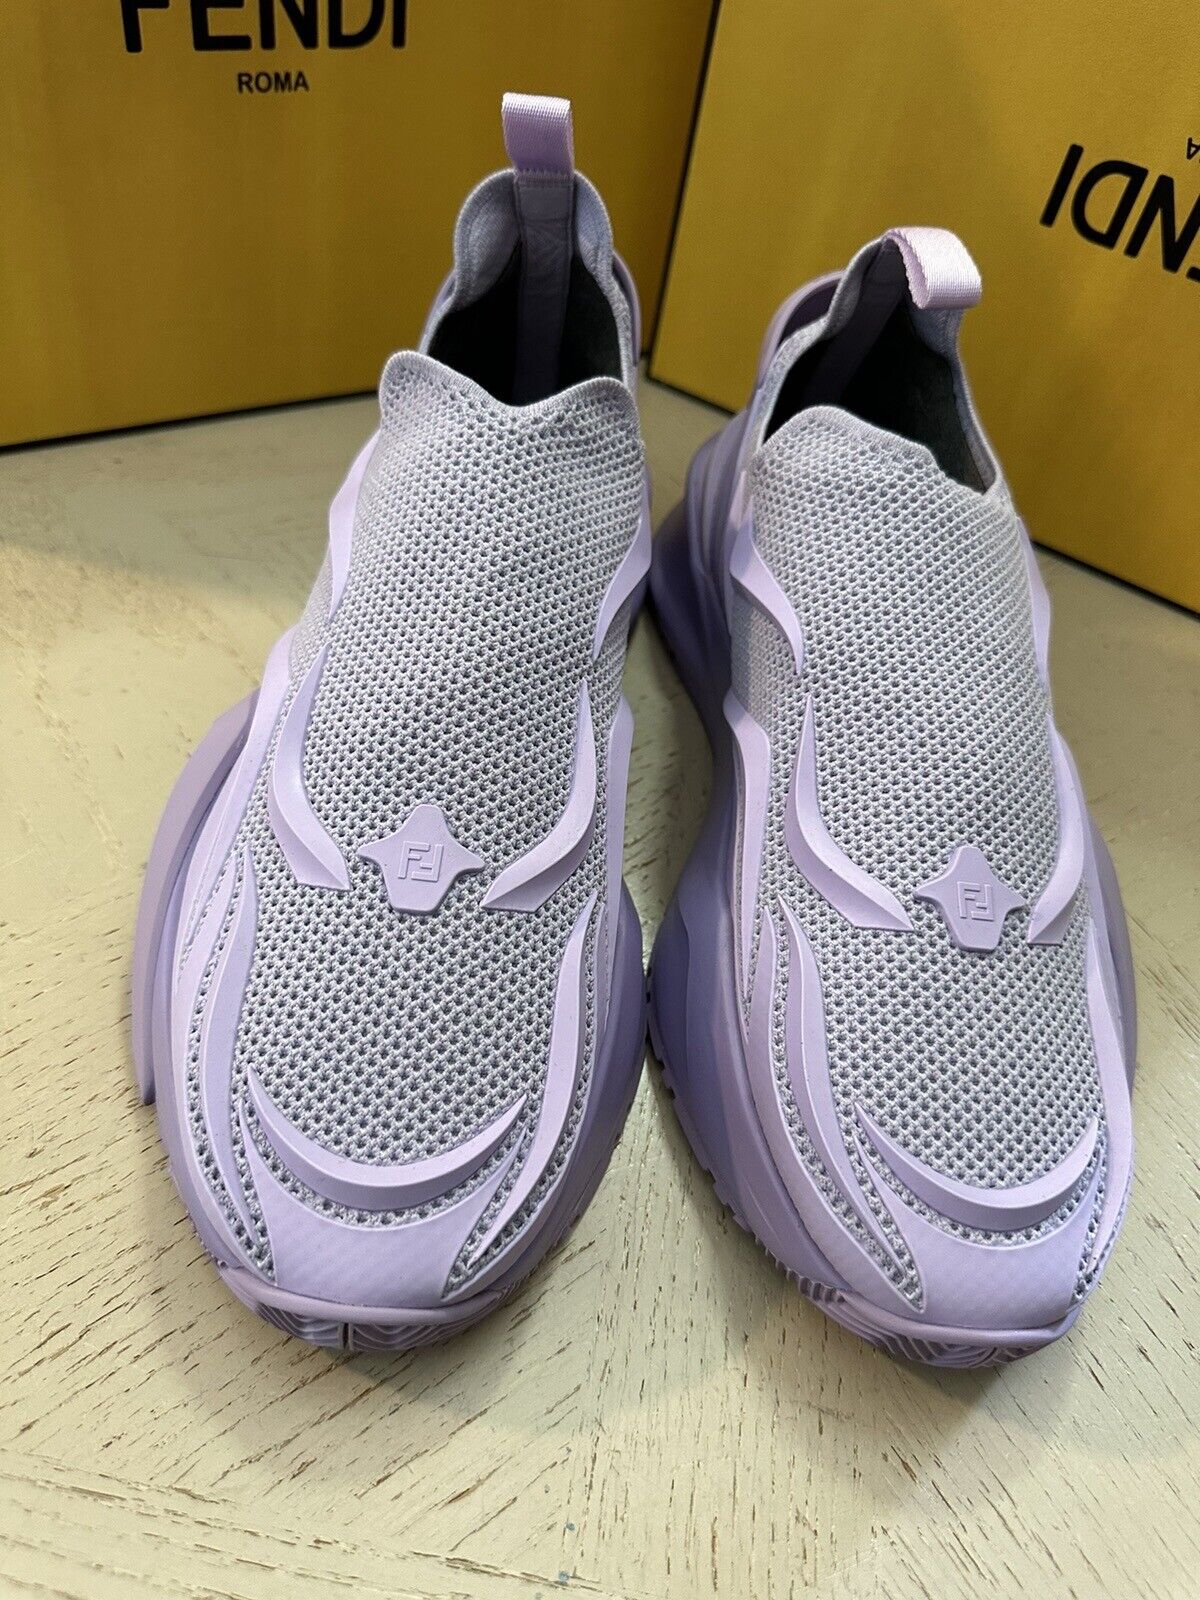 NIB $1050 Fendi Men Flow Knit Low Top Sneakers Lilac/Purple 11 US/10 UK 7E1504